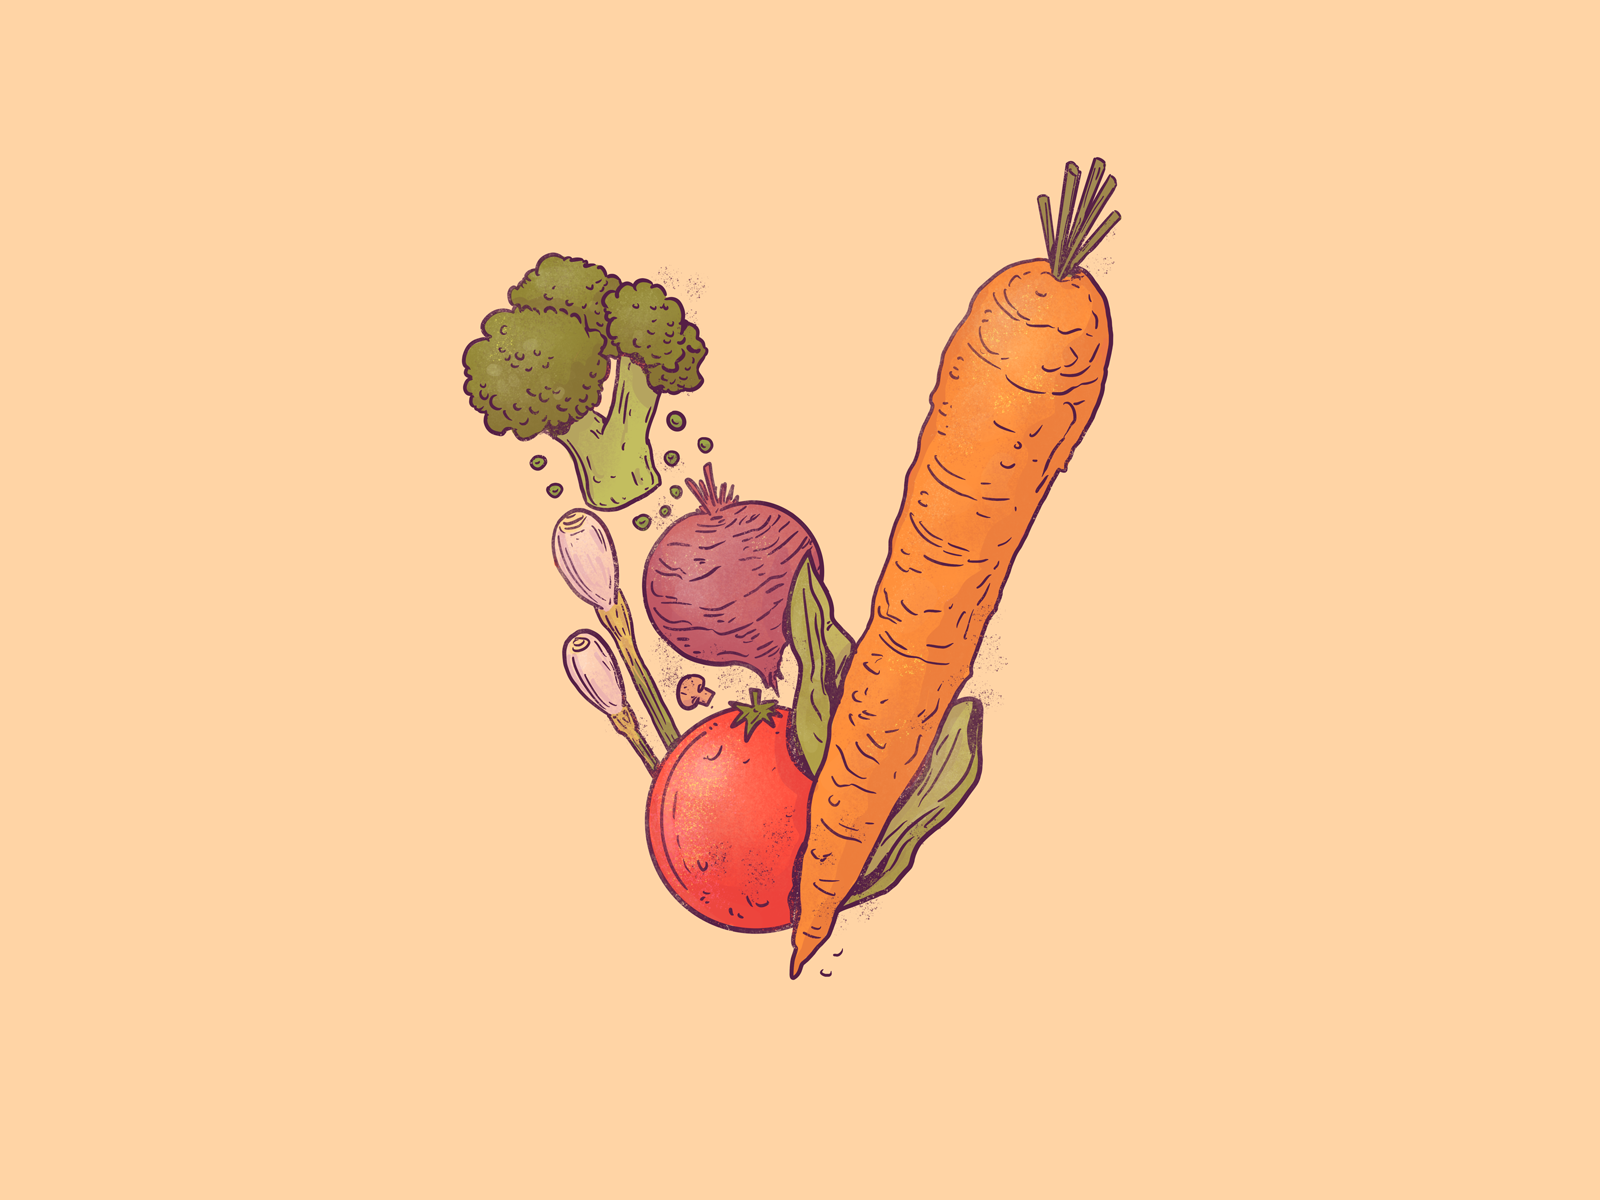 36 Days of Type: Vegetables by José Pablo Ledesma on Dribbble